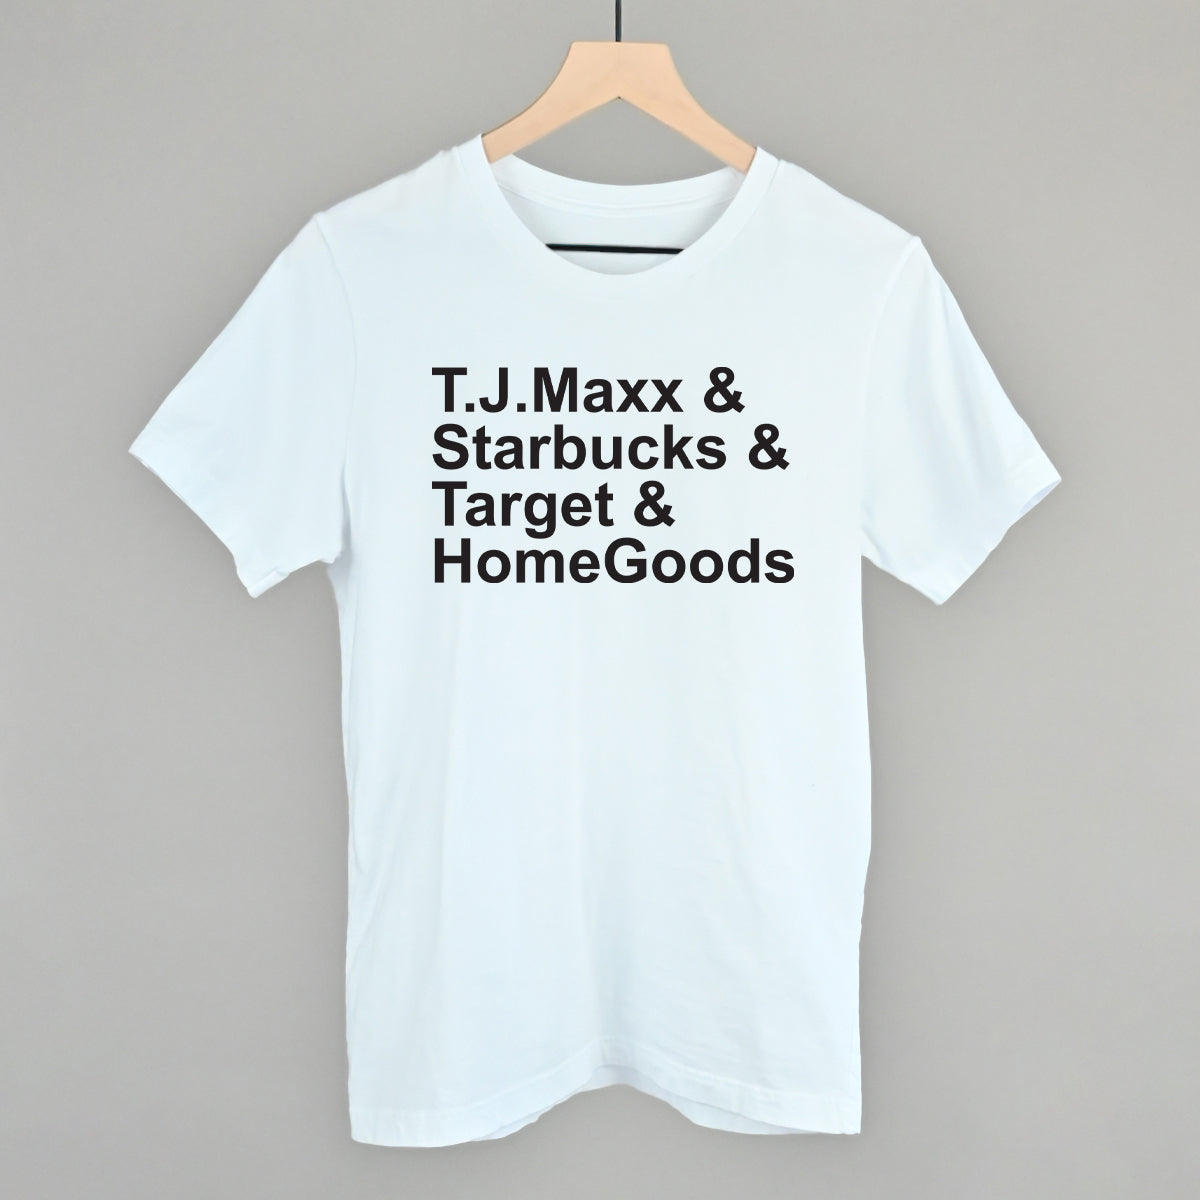 T.J.Maxx (@tjmaxx) • Instagram photos and videos